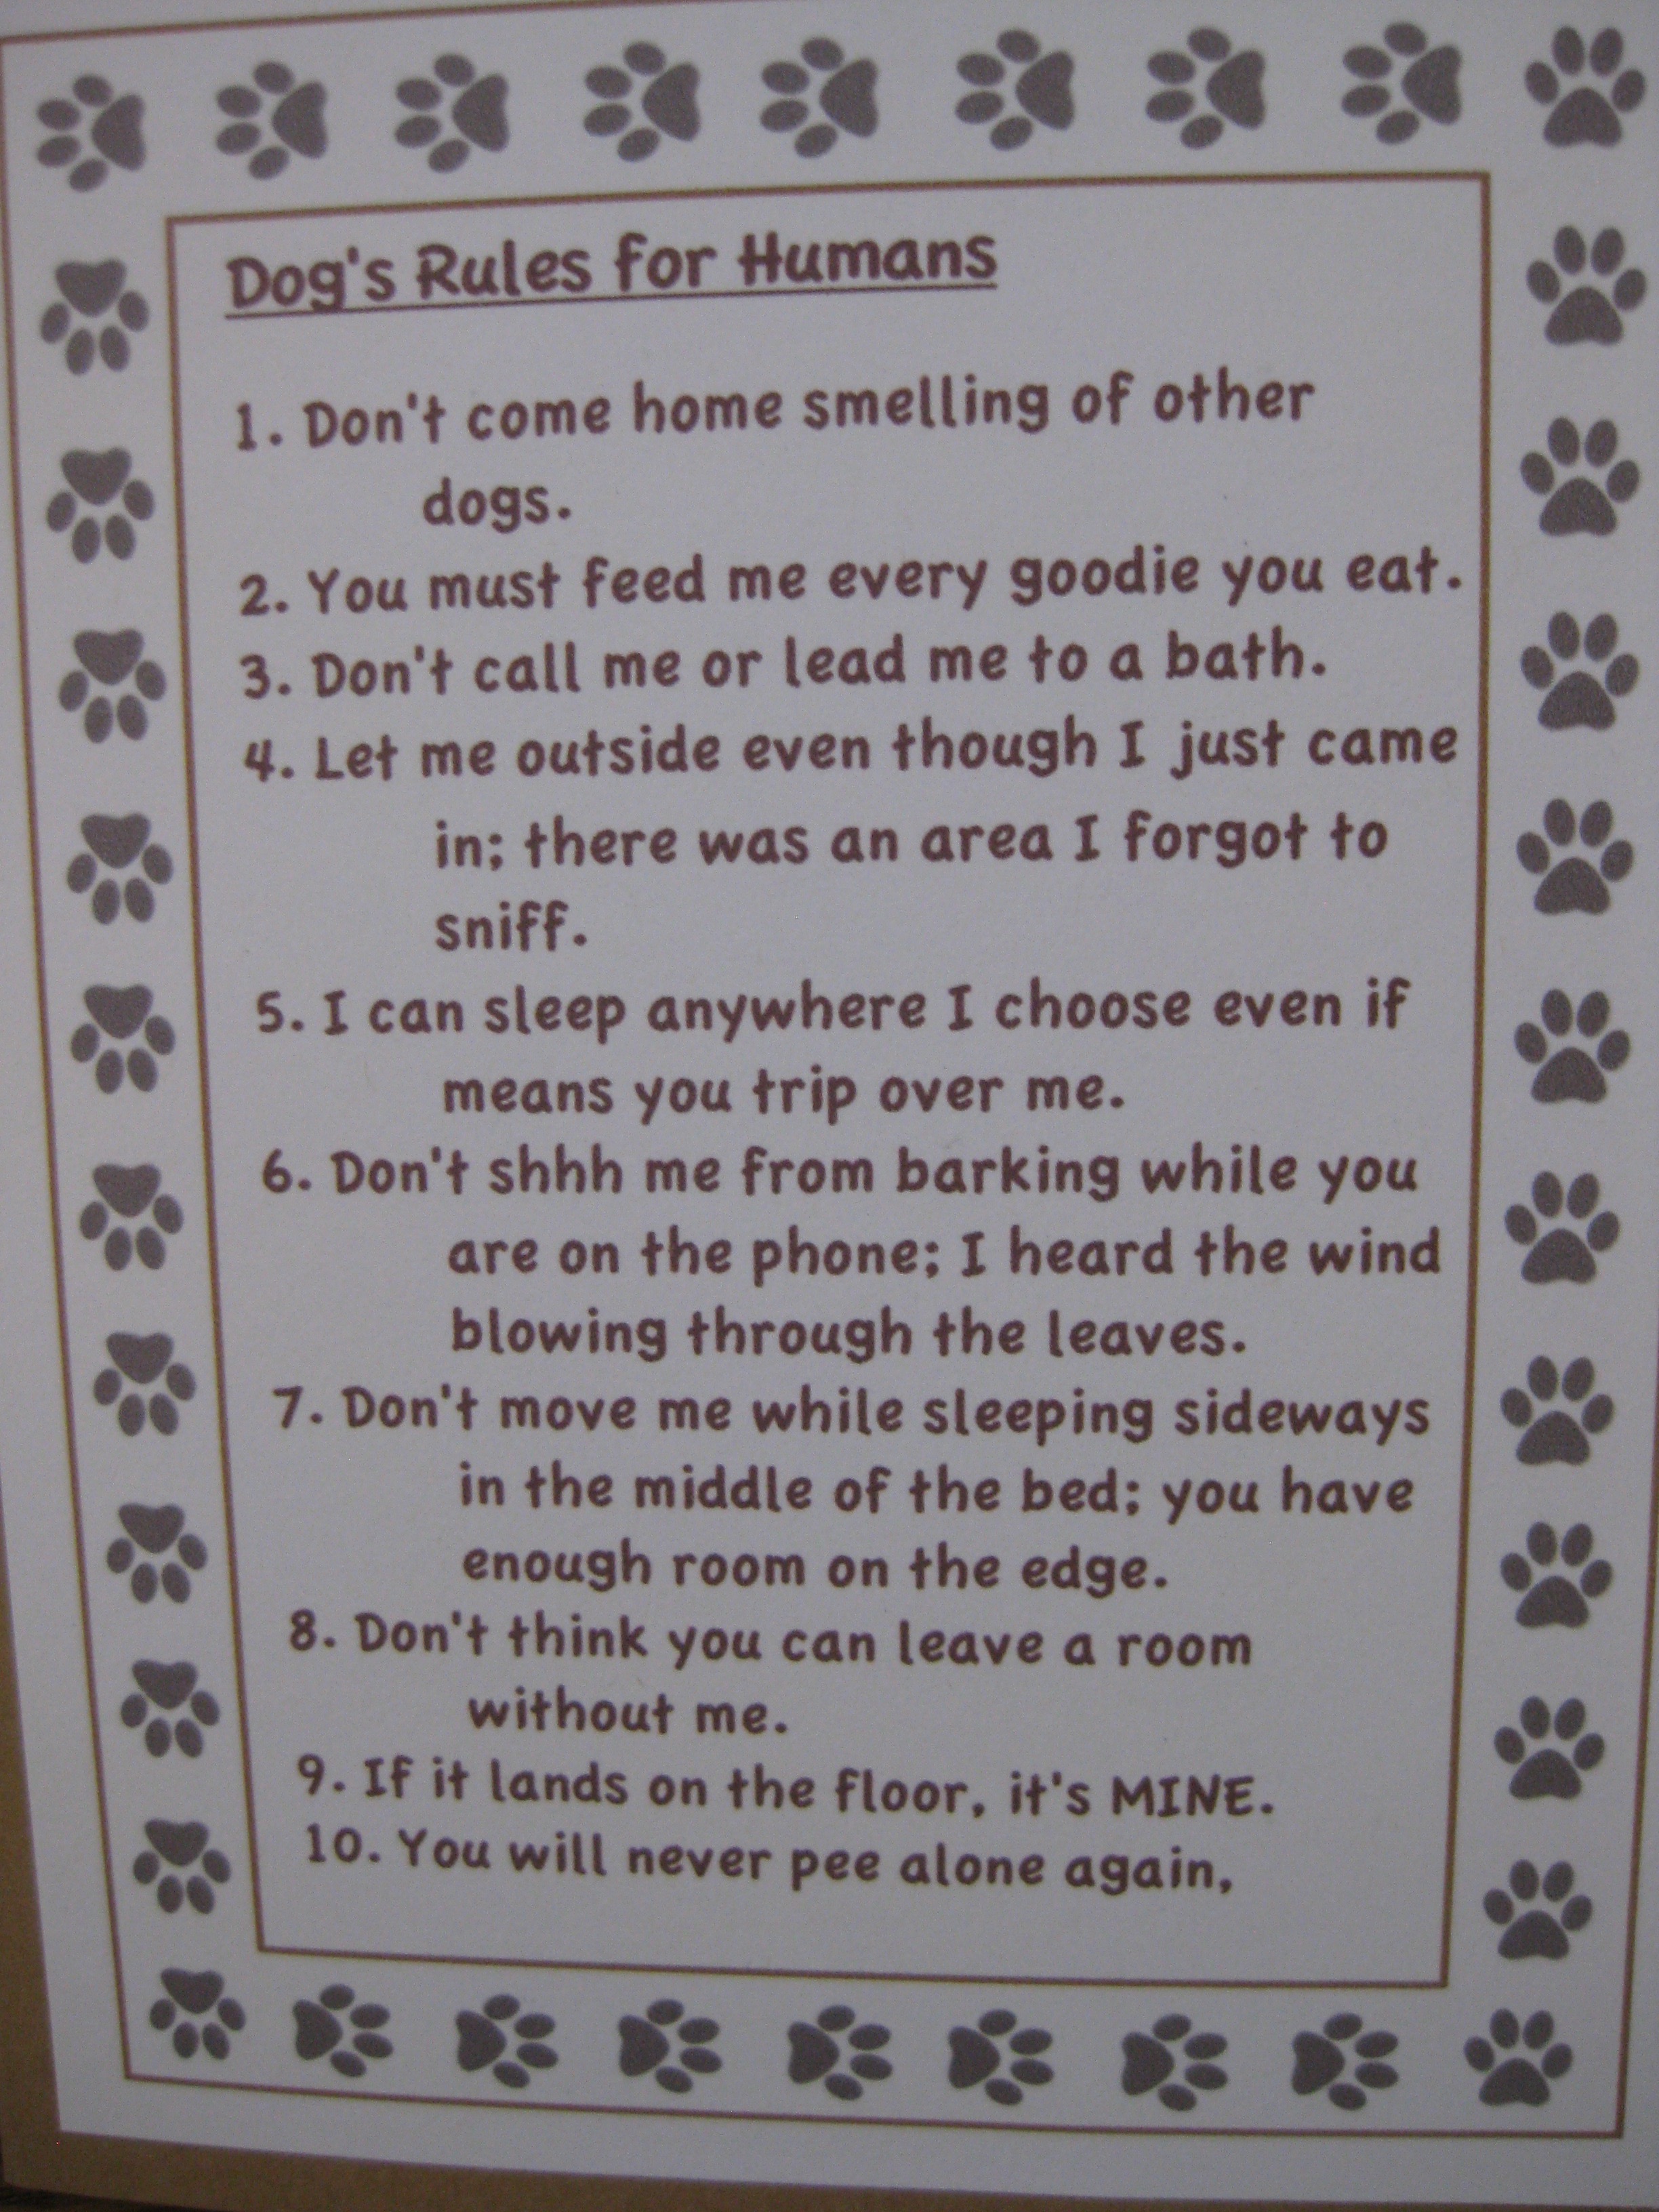 Dog's rules